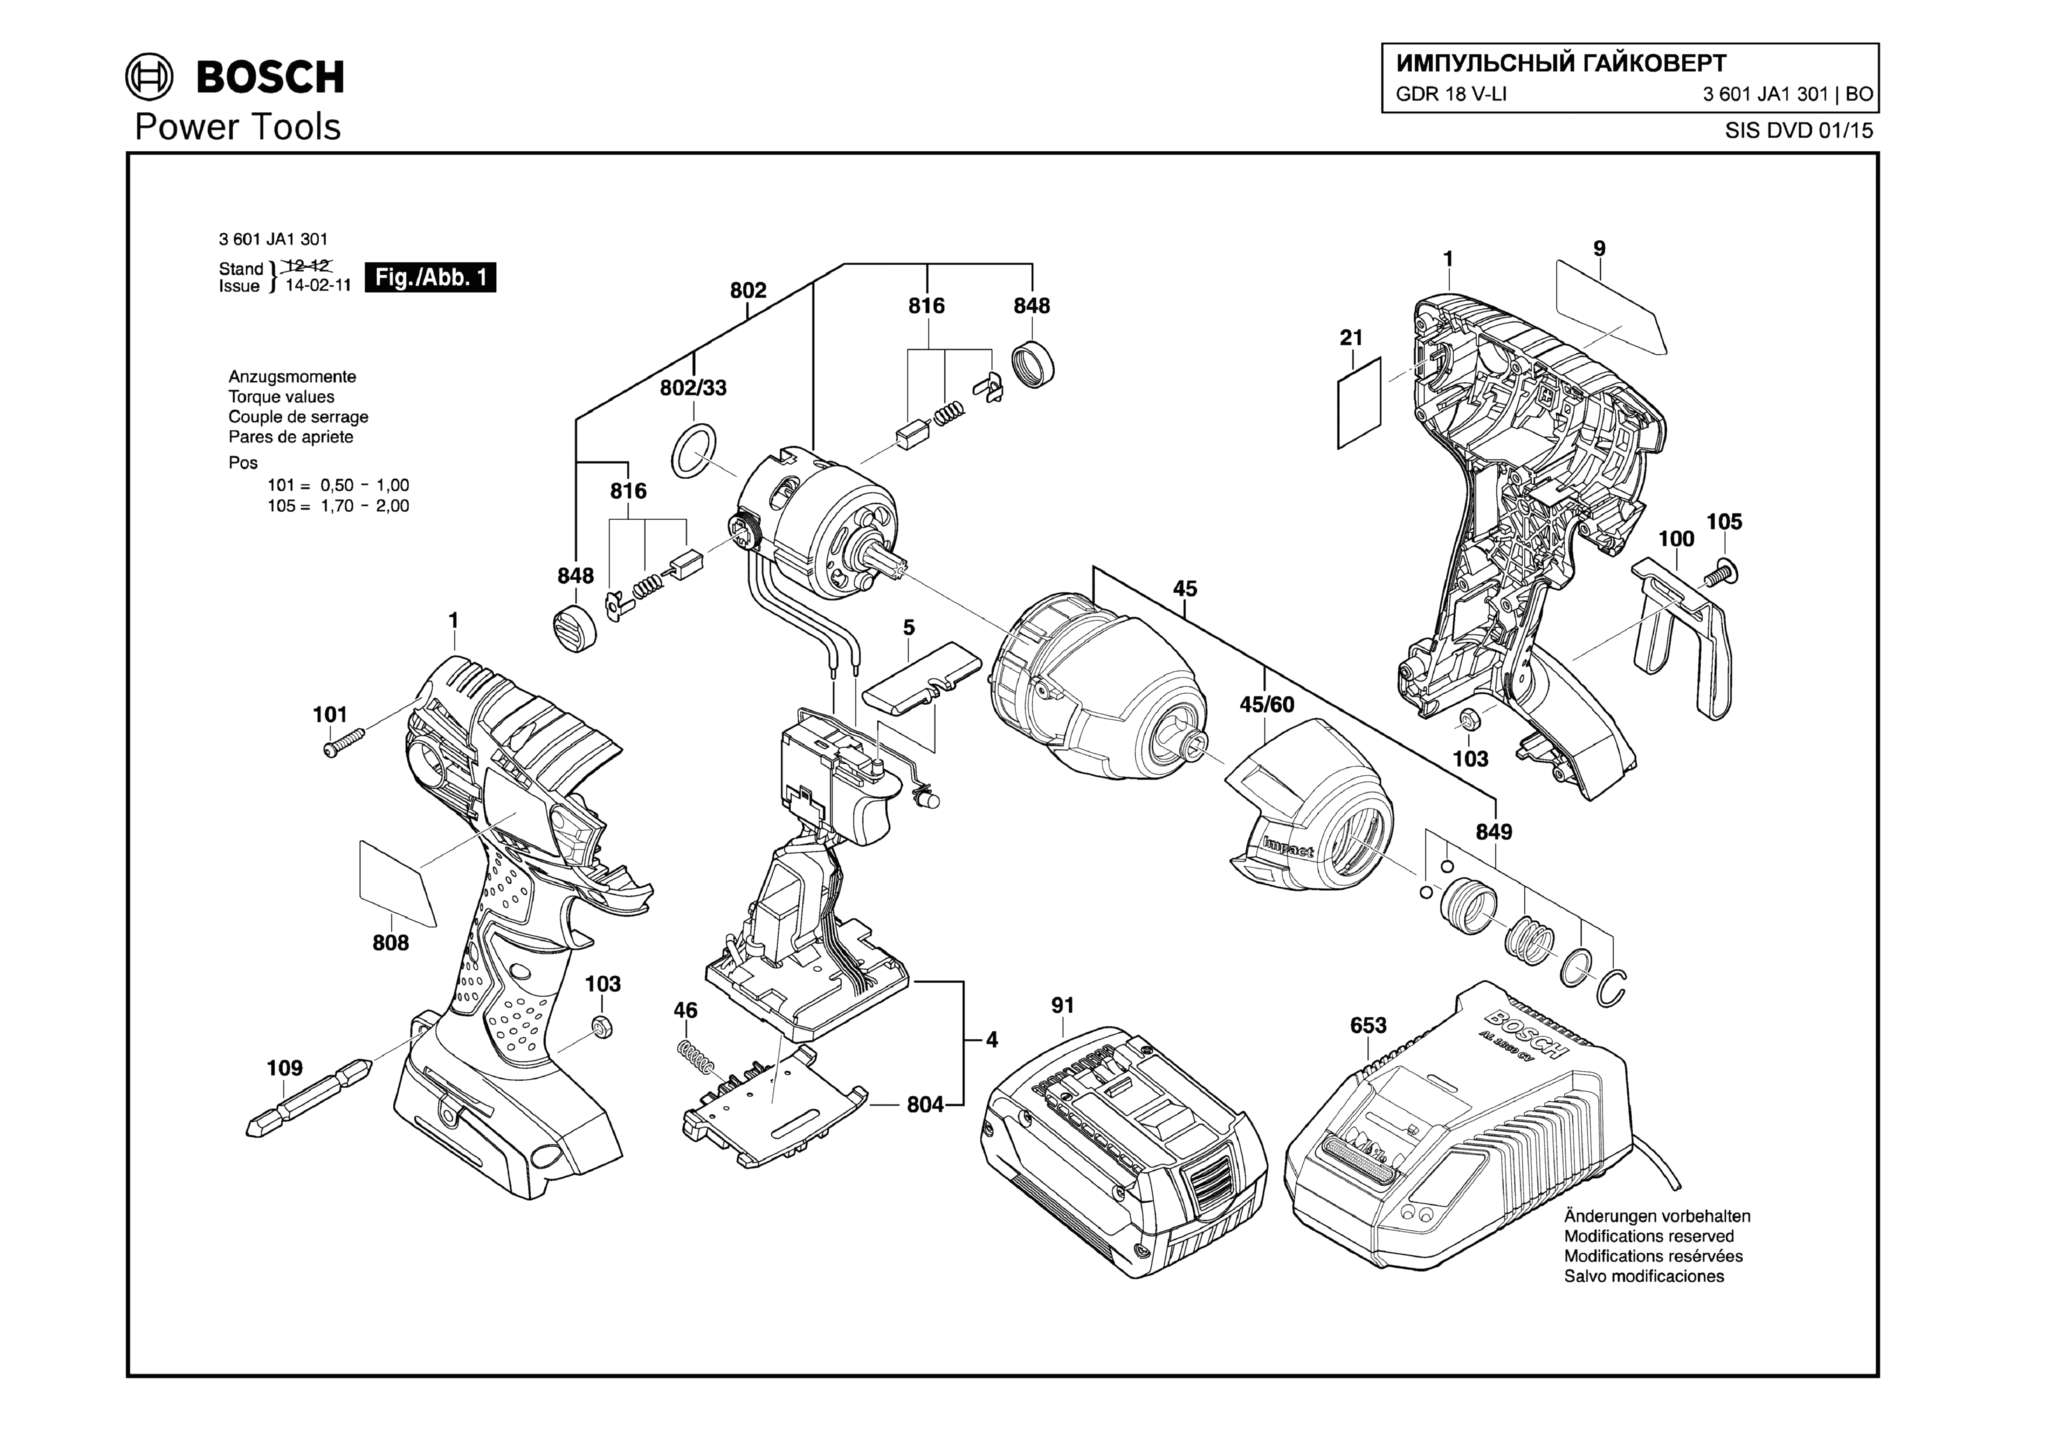 Запчасти, схема и деталировка Bosch GDR 18 V-LI (ТИП 3601JA1301)